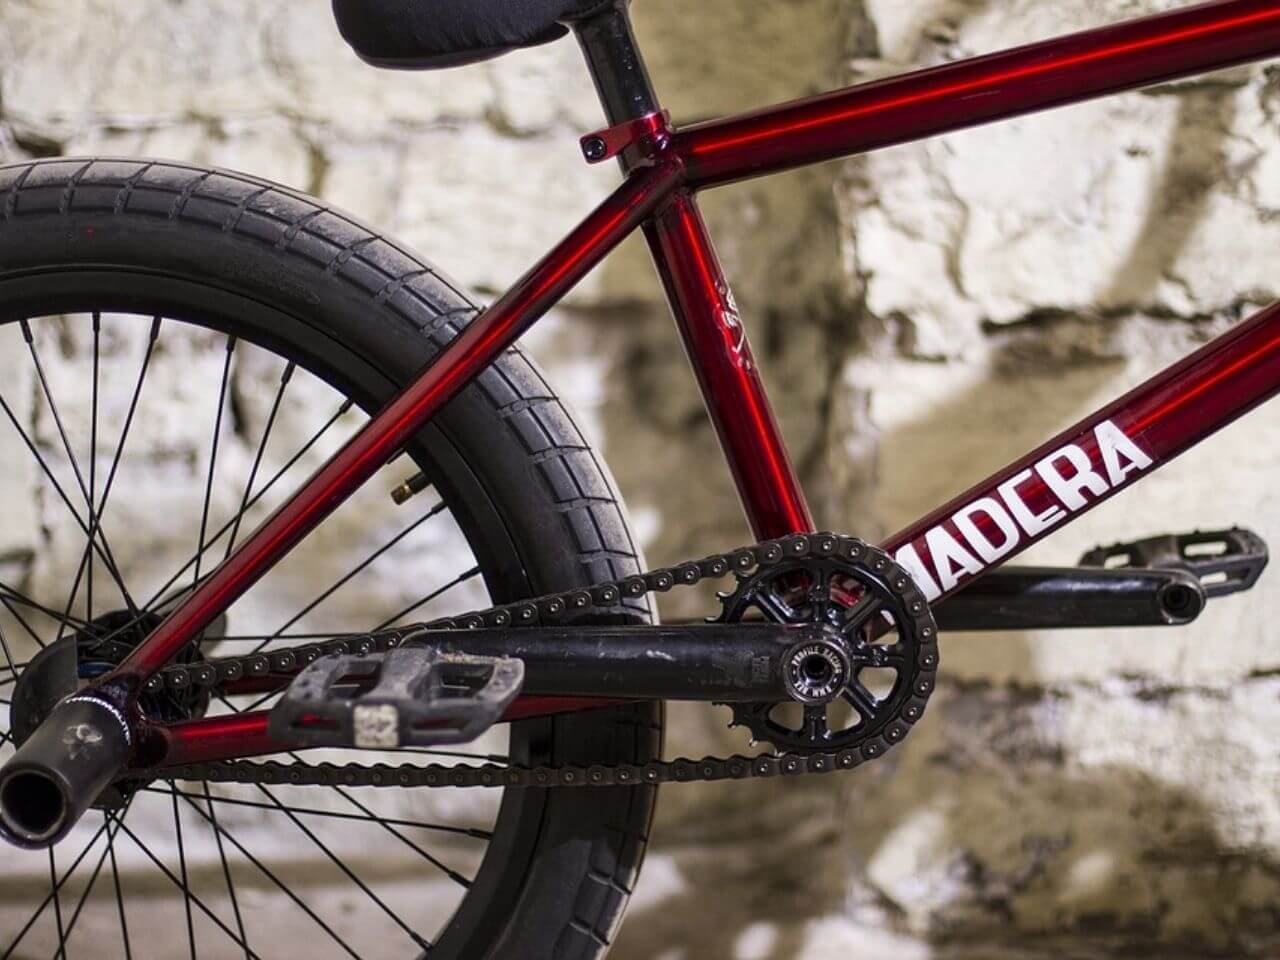 Red BMX Bike against wall